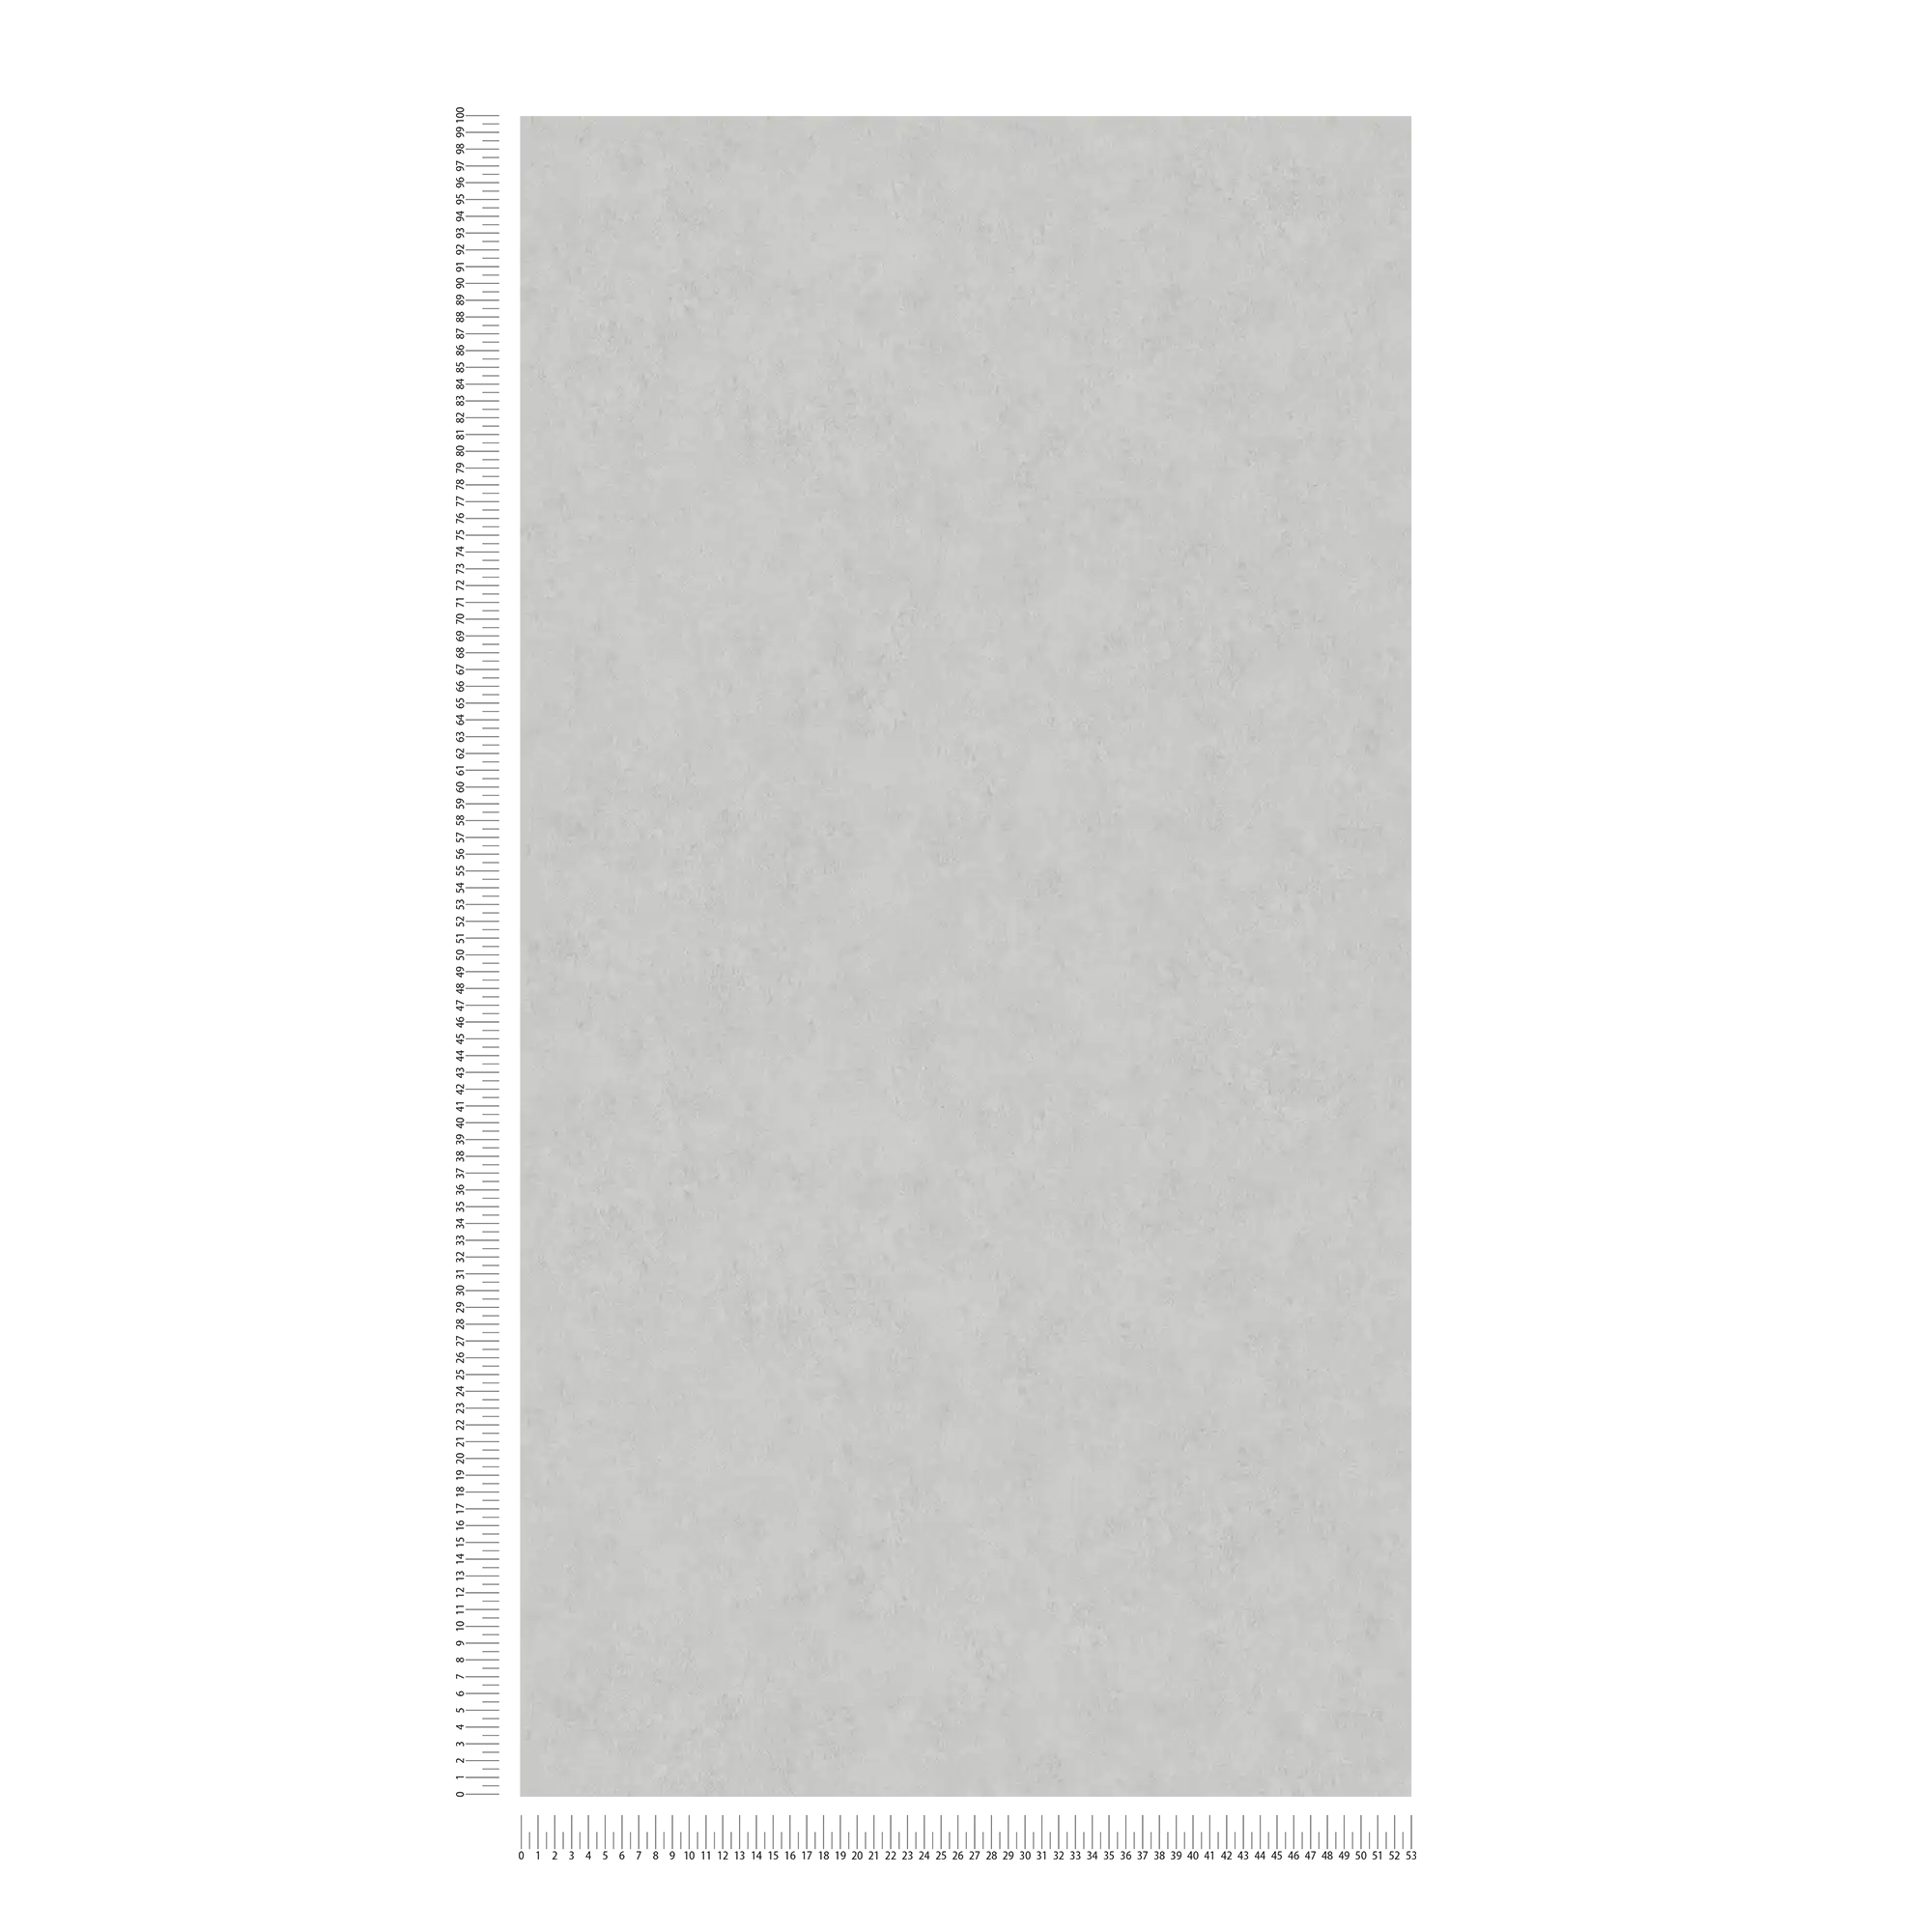             Papel pintado unitario con aspecto de escayola - gris
        